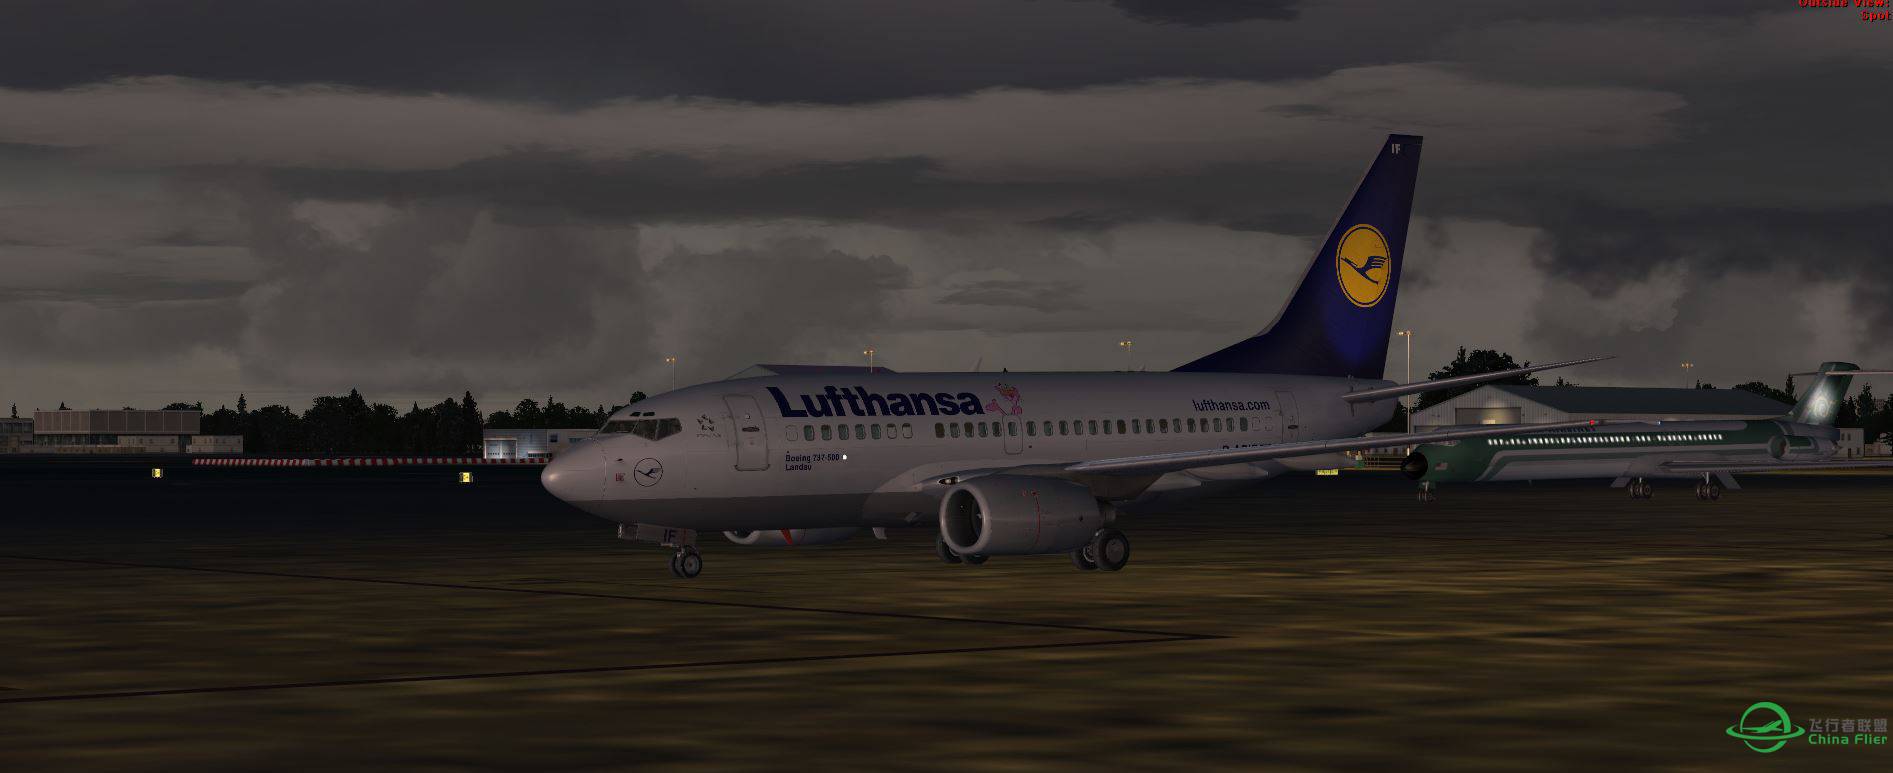 B737 Lufthansa-7912 